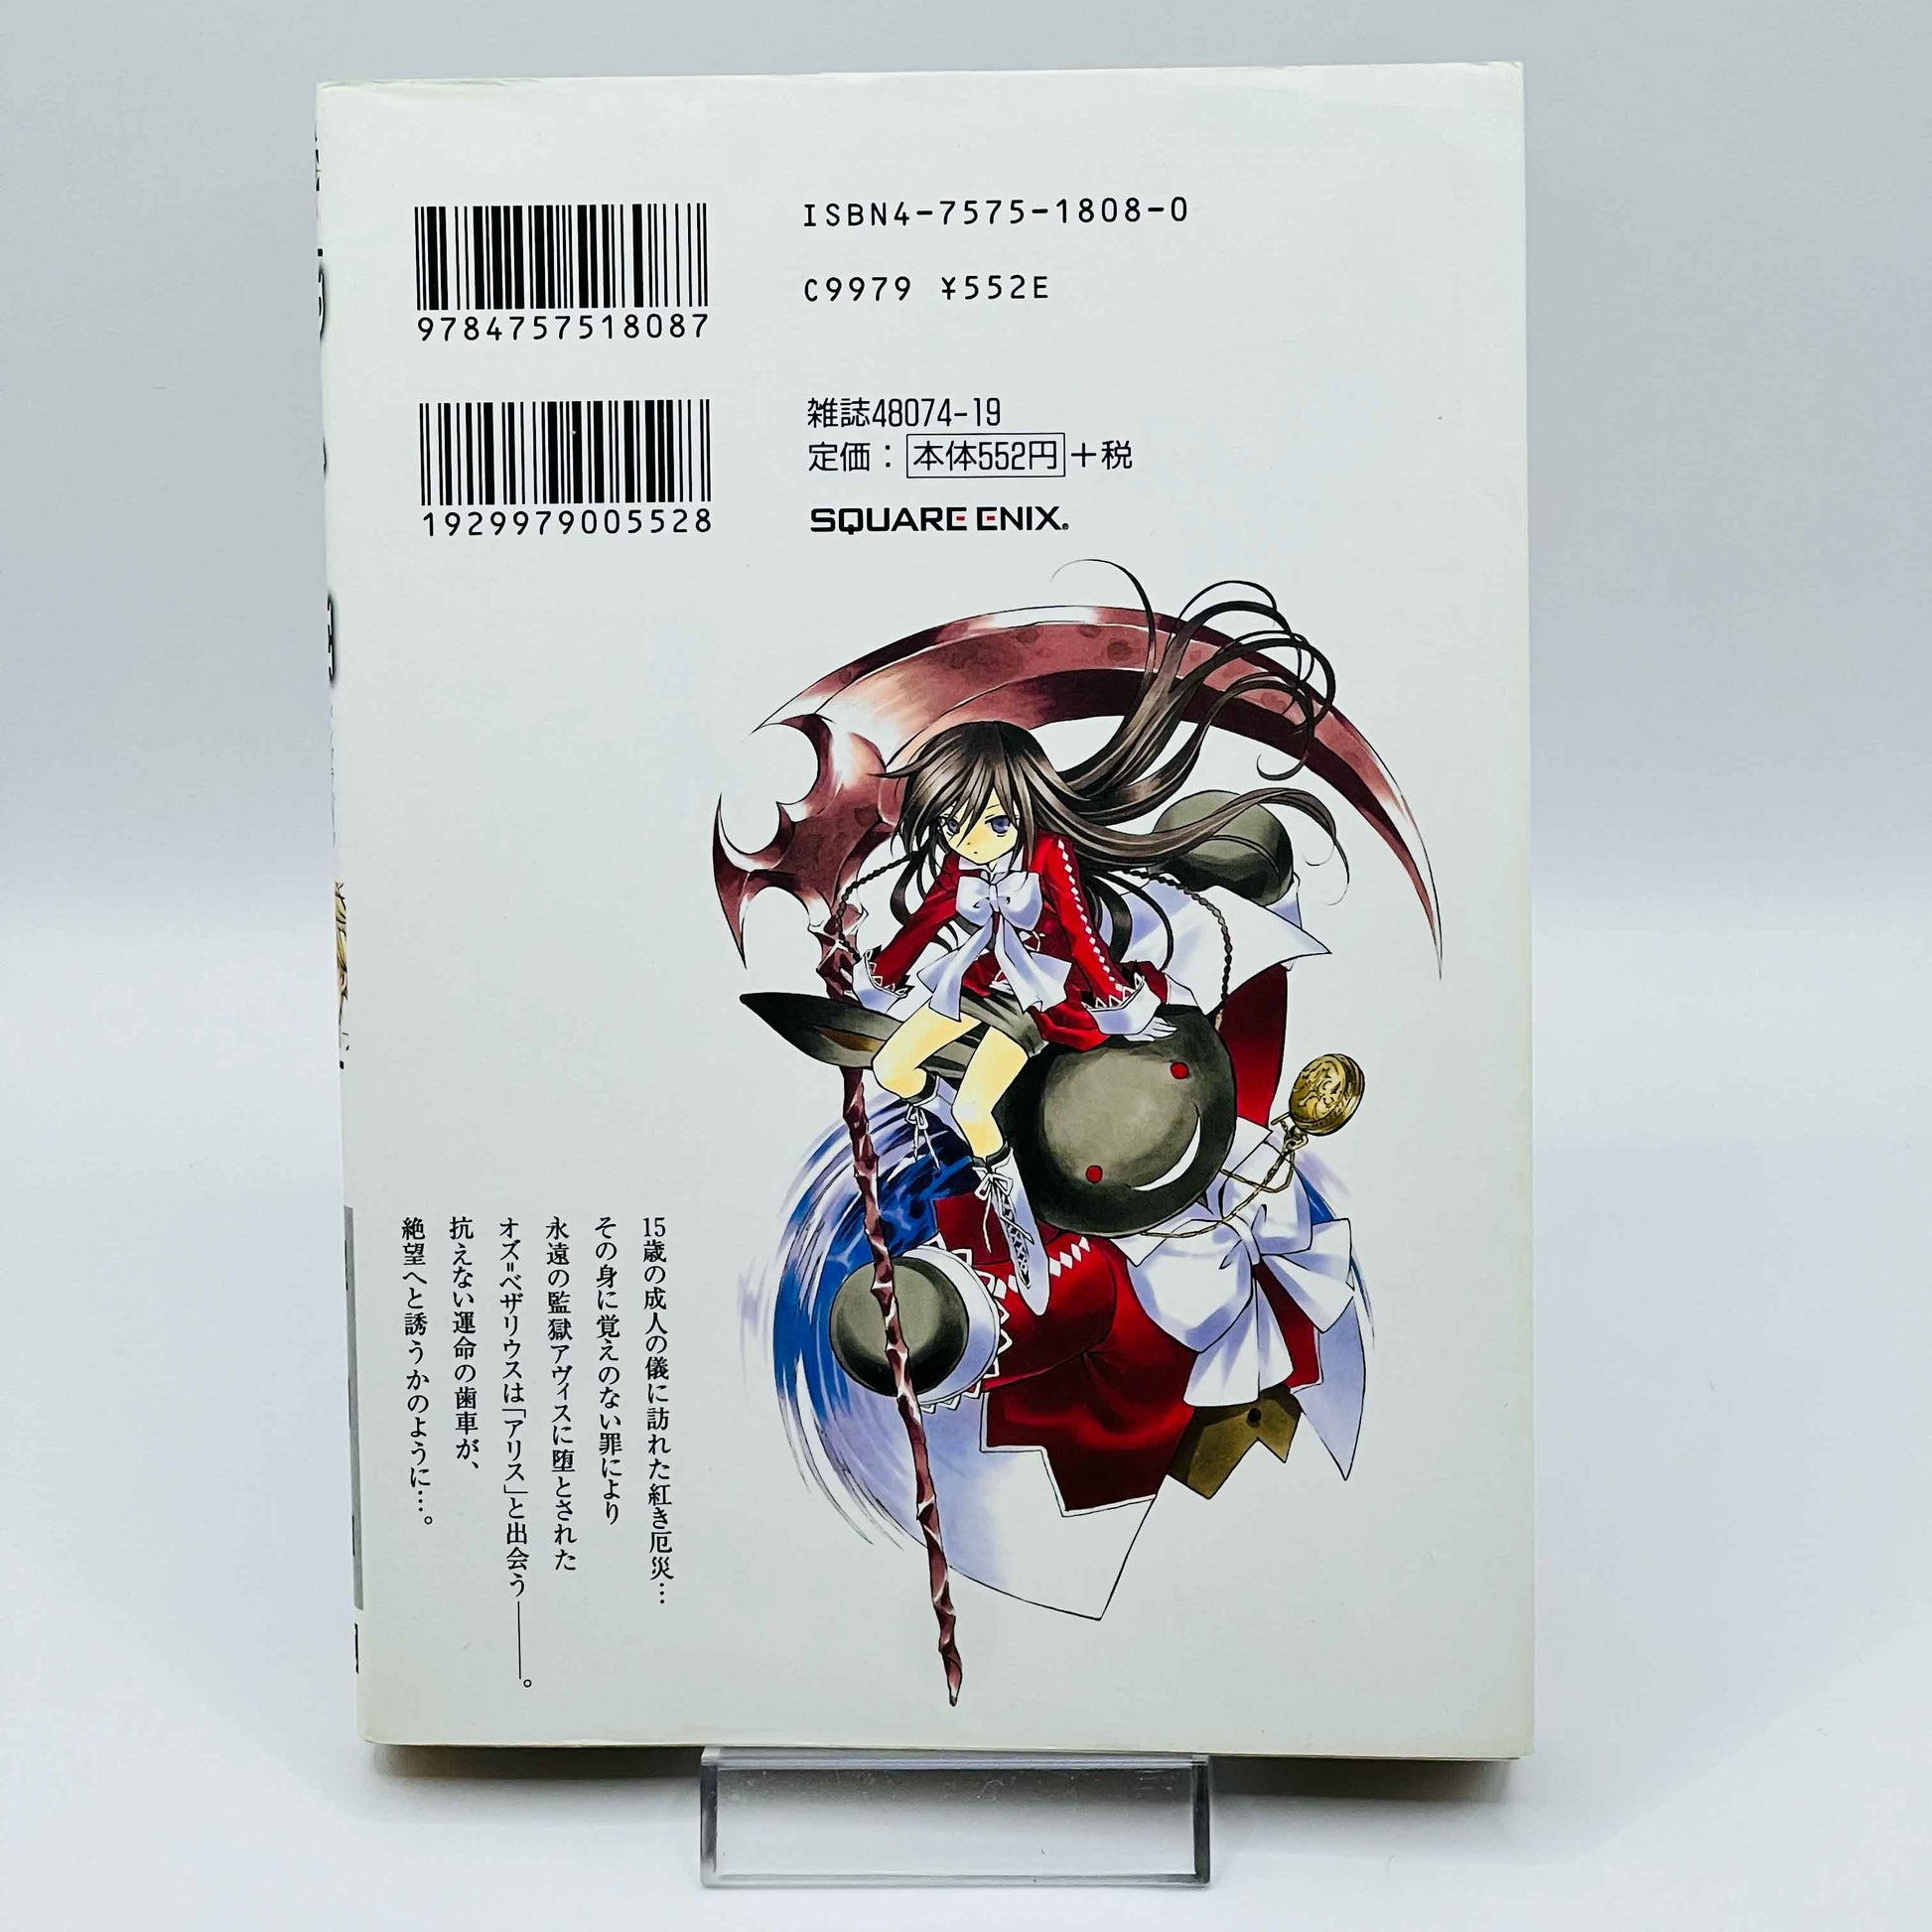 Pandora Hearts - Volume 01 - 1stPrint.net - 1st First Print Edition Manga Store - M-PANDORAHEARTS-01-001